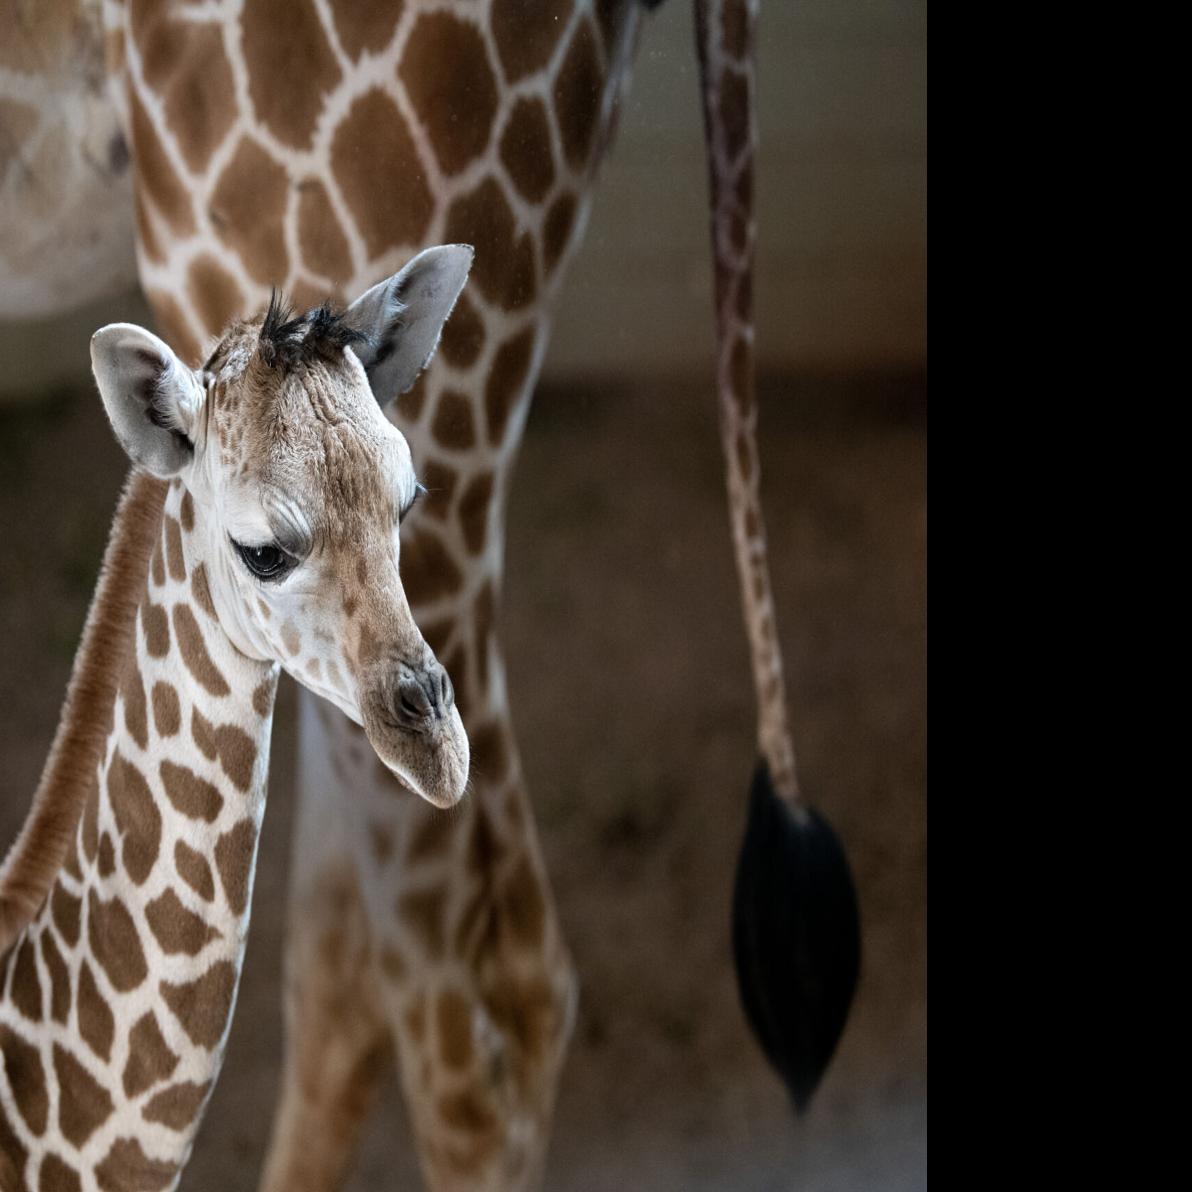 baby giraffe close up